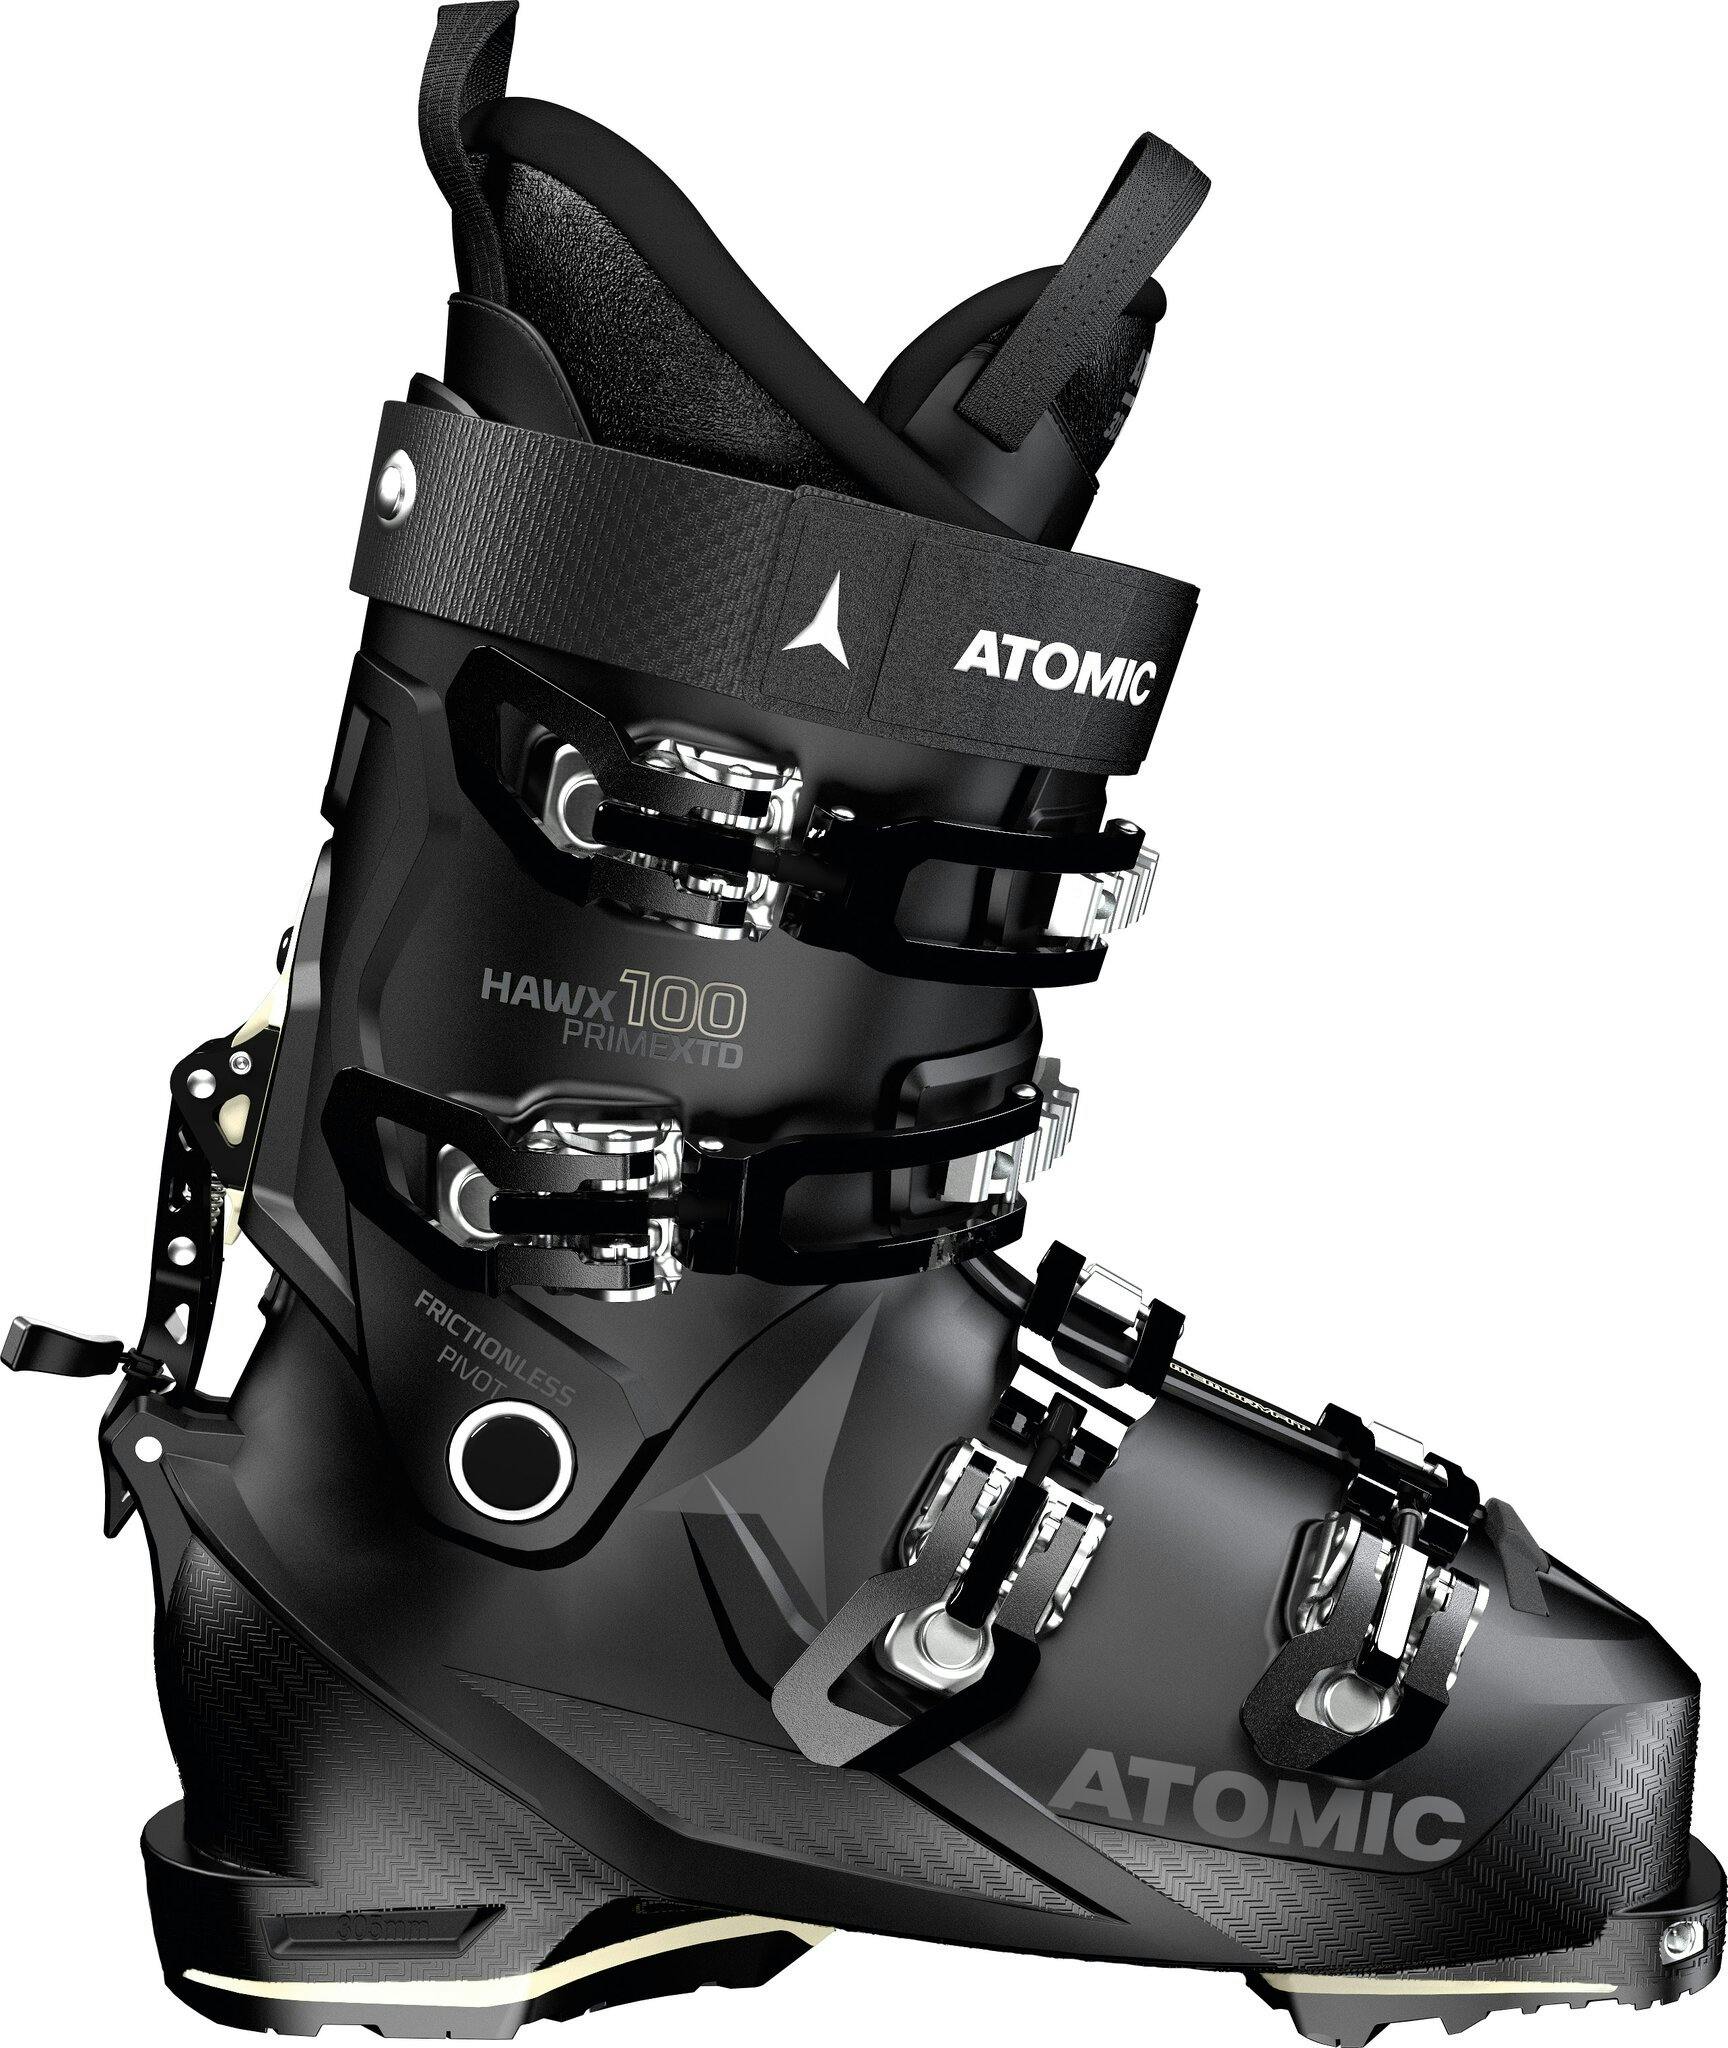 Product image for Hawx Prime XTD 100 HT GW Ski Boot - Unisex